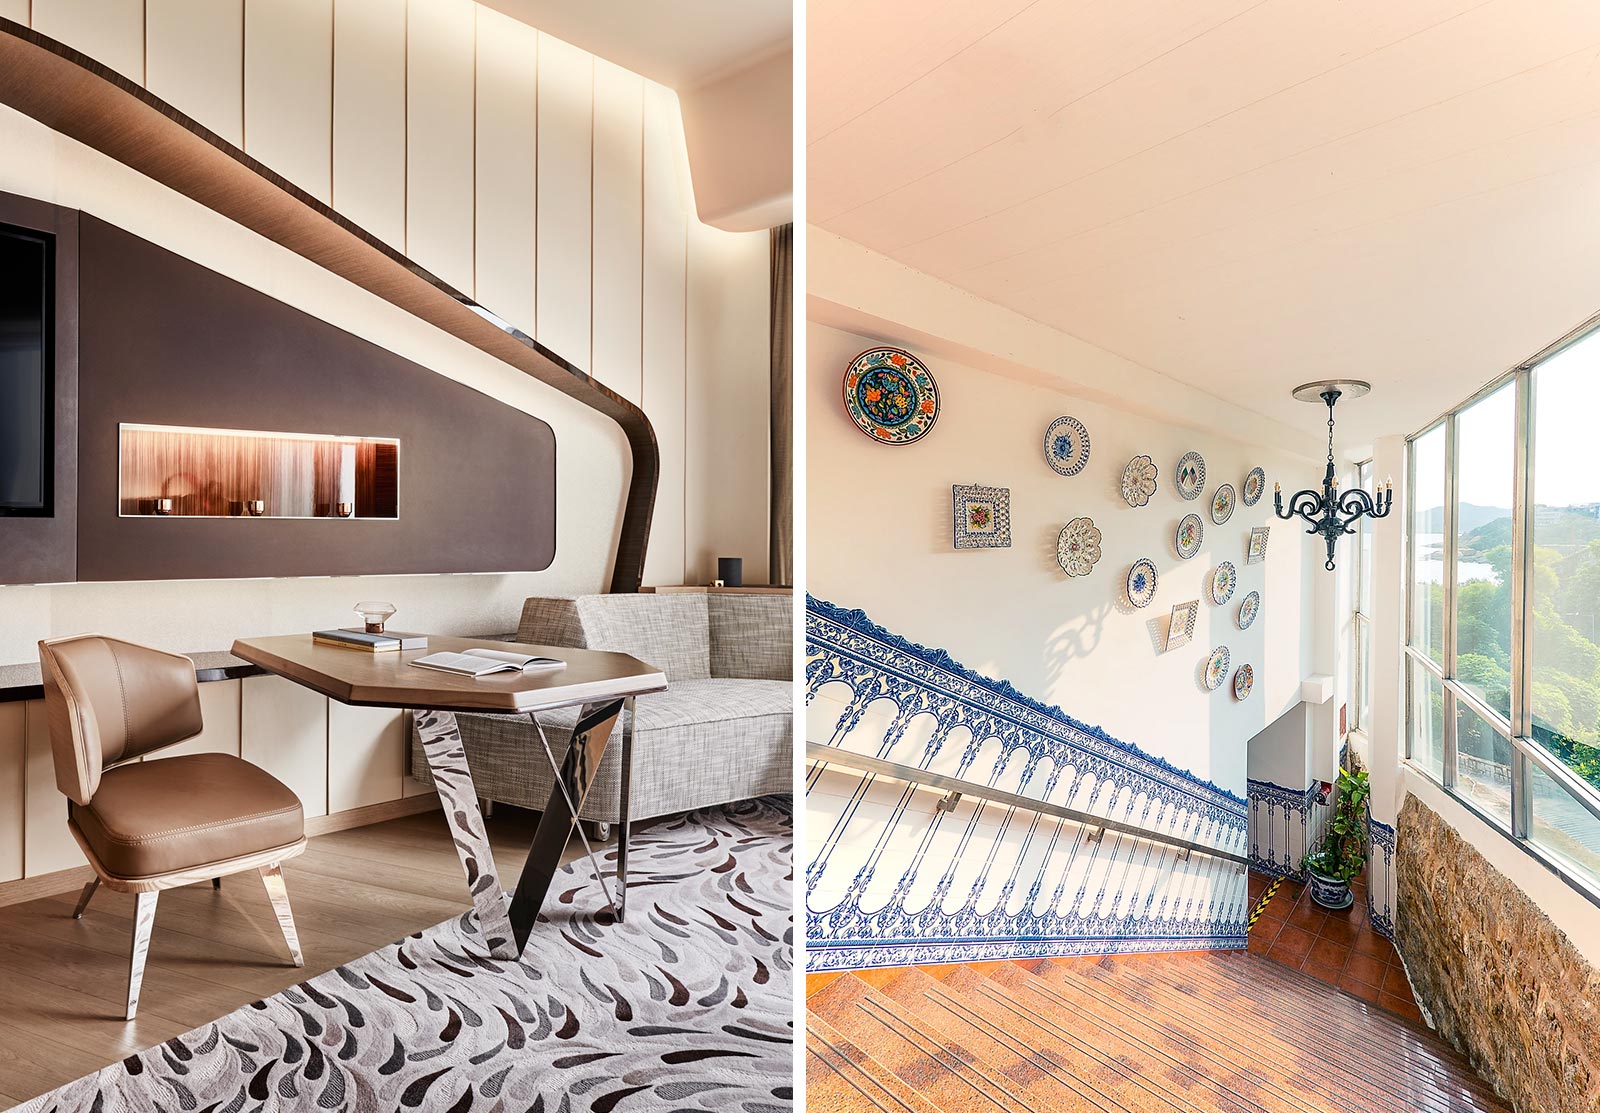 Morpheus Premier King-Zaha Hadid Pousada de Coloane staircases Portuguese colonial style hotel interior